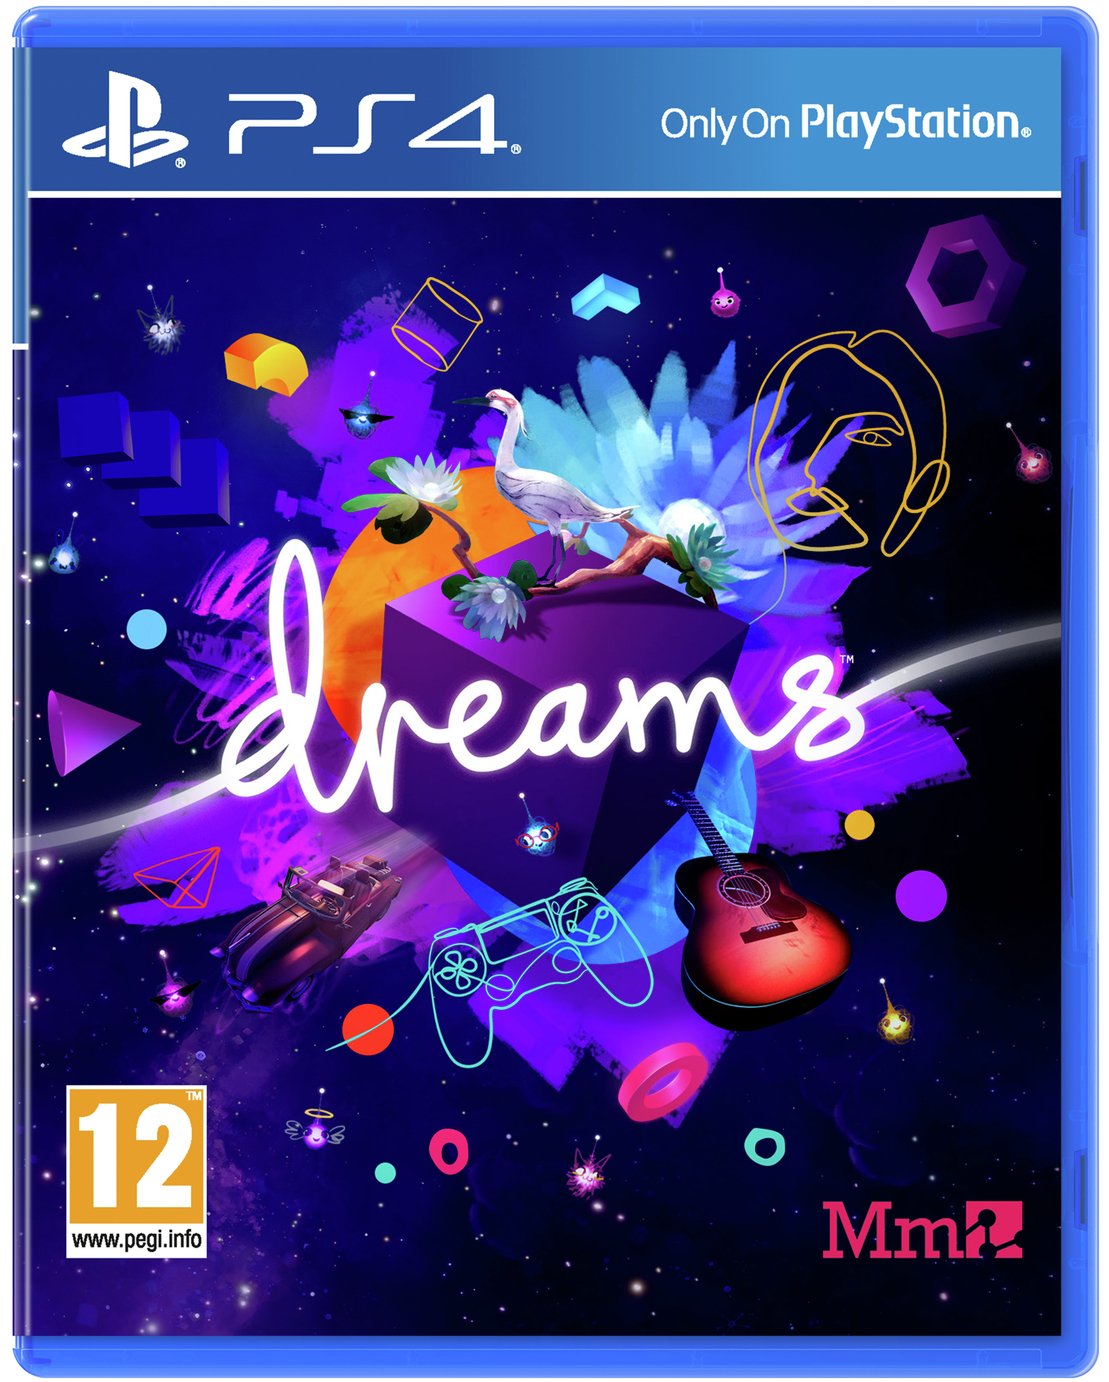 Dreams PS4 Preorder Game. Reviews